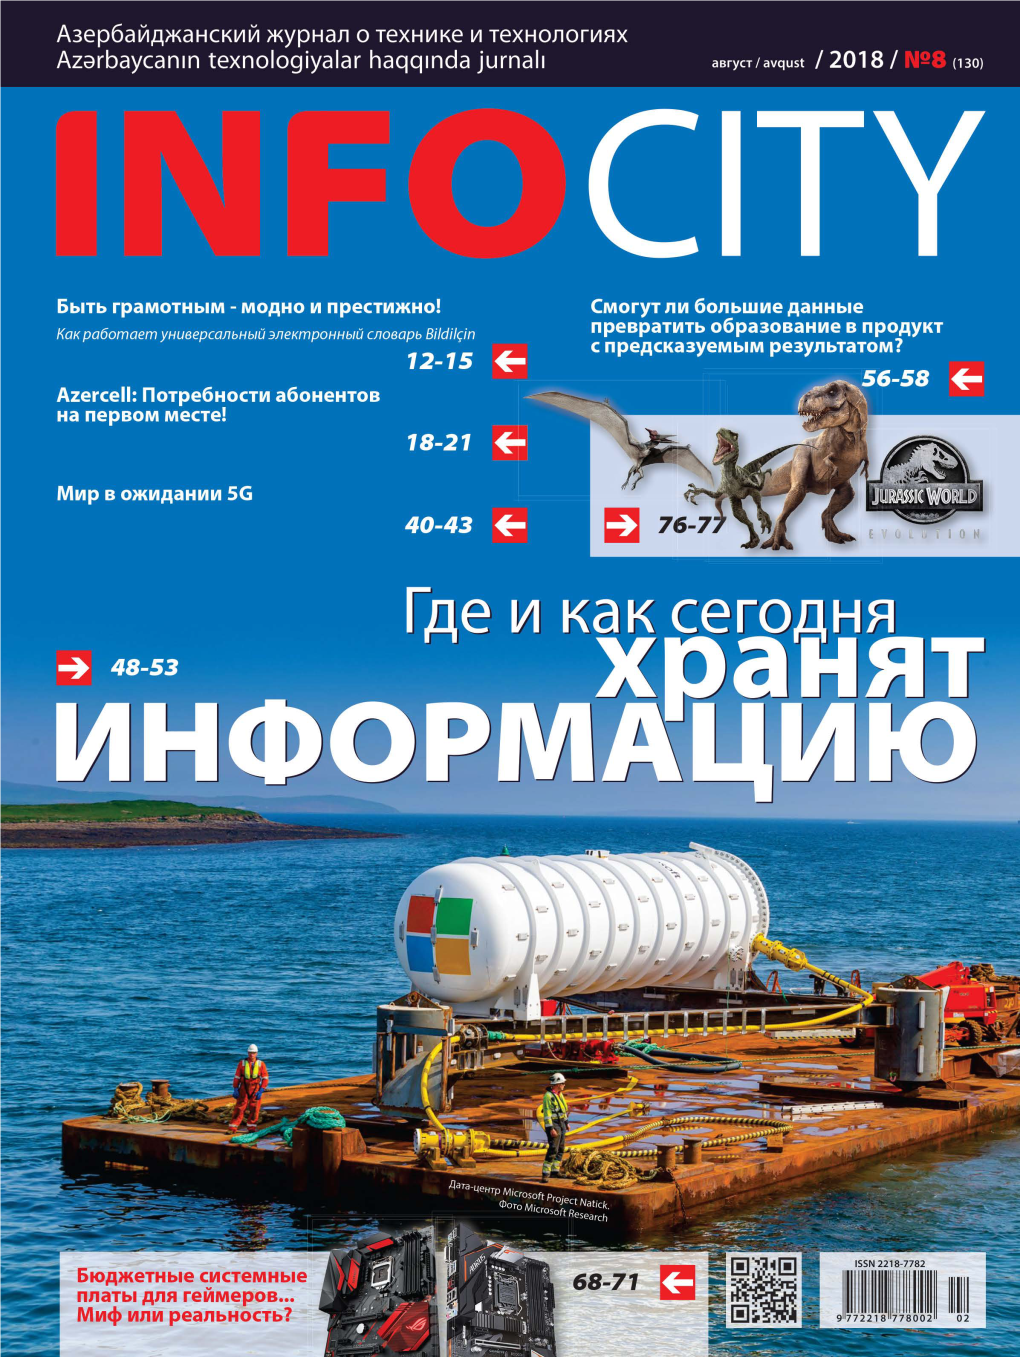 Infocity #130